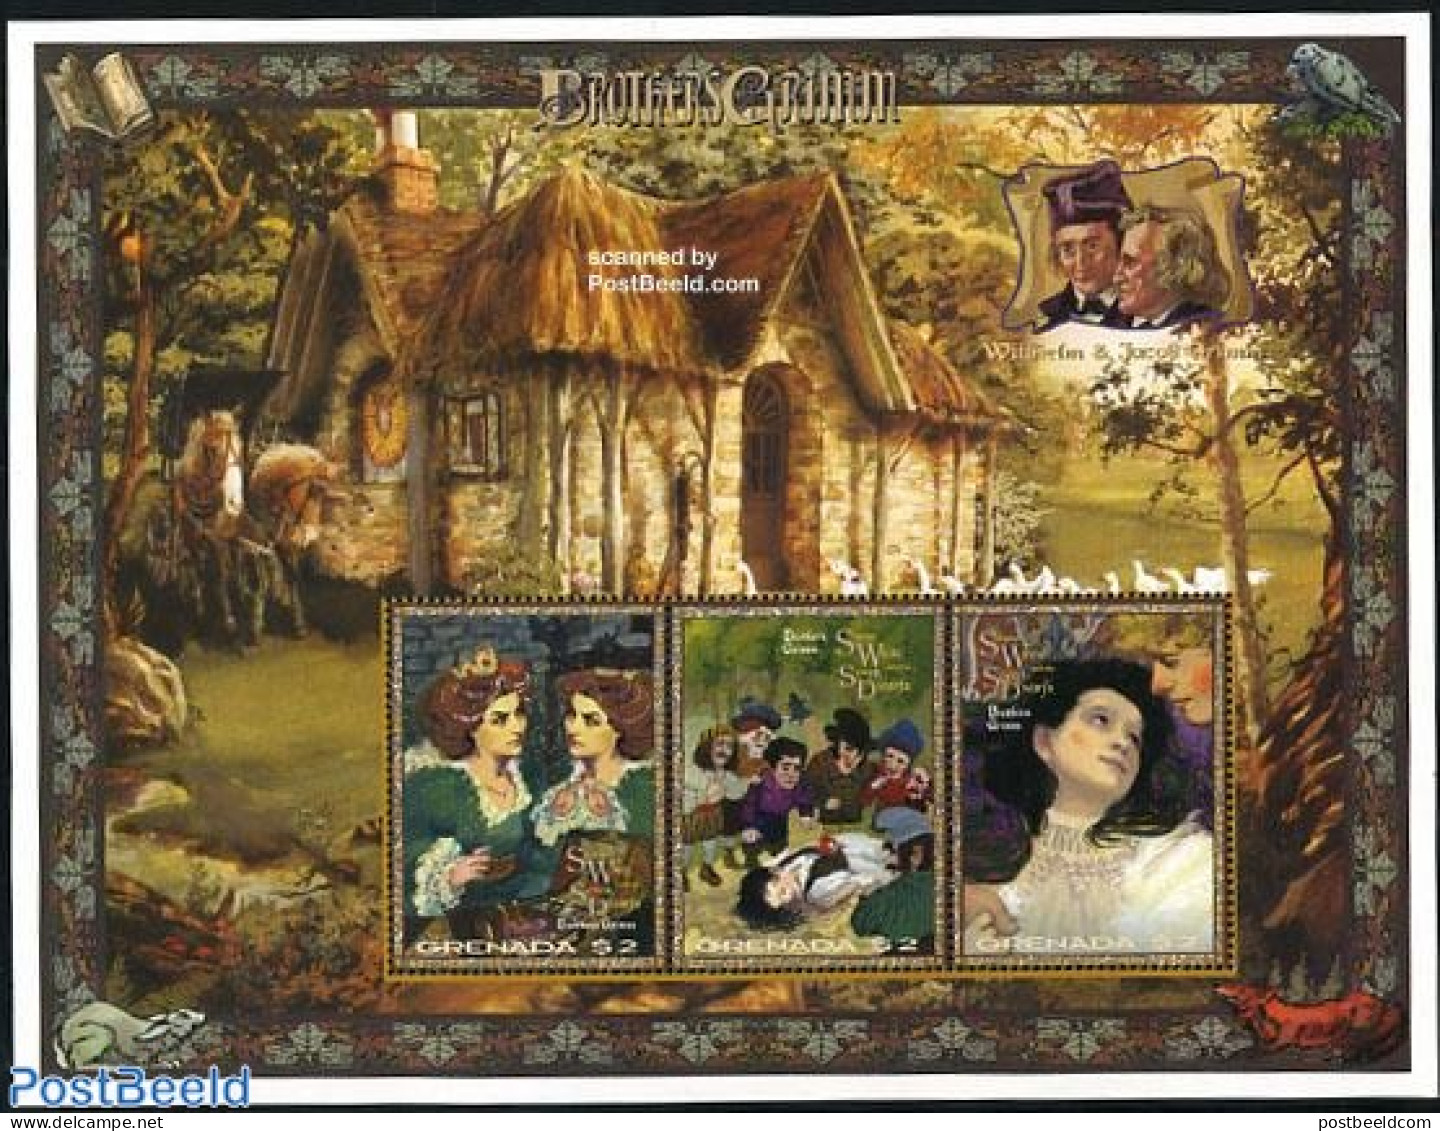 Grenada 1997 Grimm Brothers 3v M/s, Mint NH, Art - Fairytales - Fiabe, Racconti Popolari & Leggende